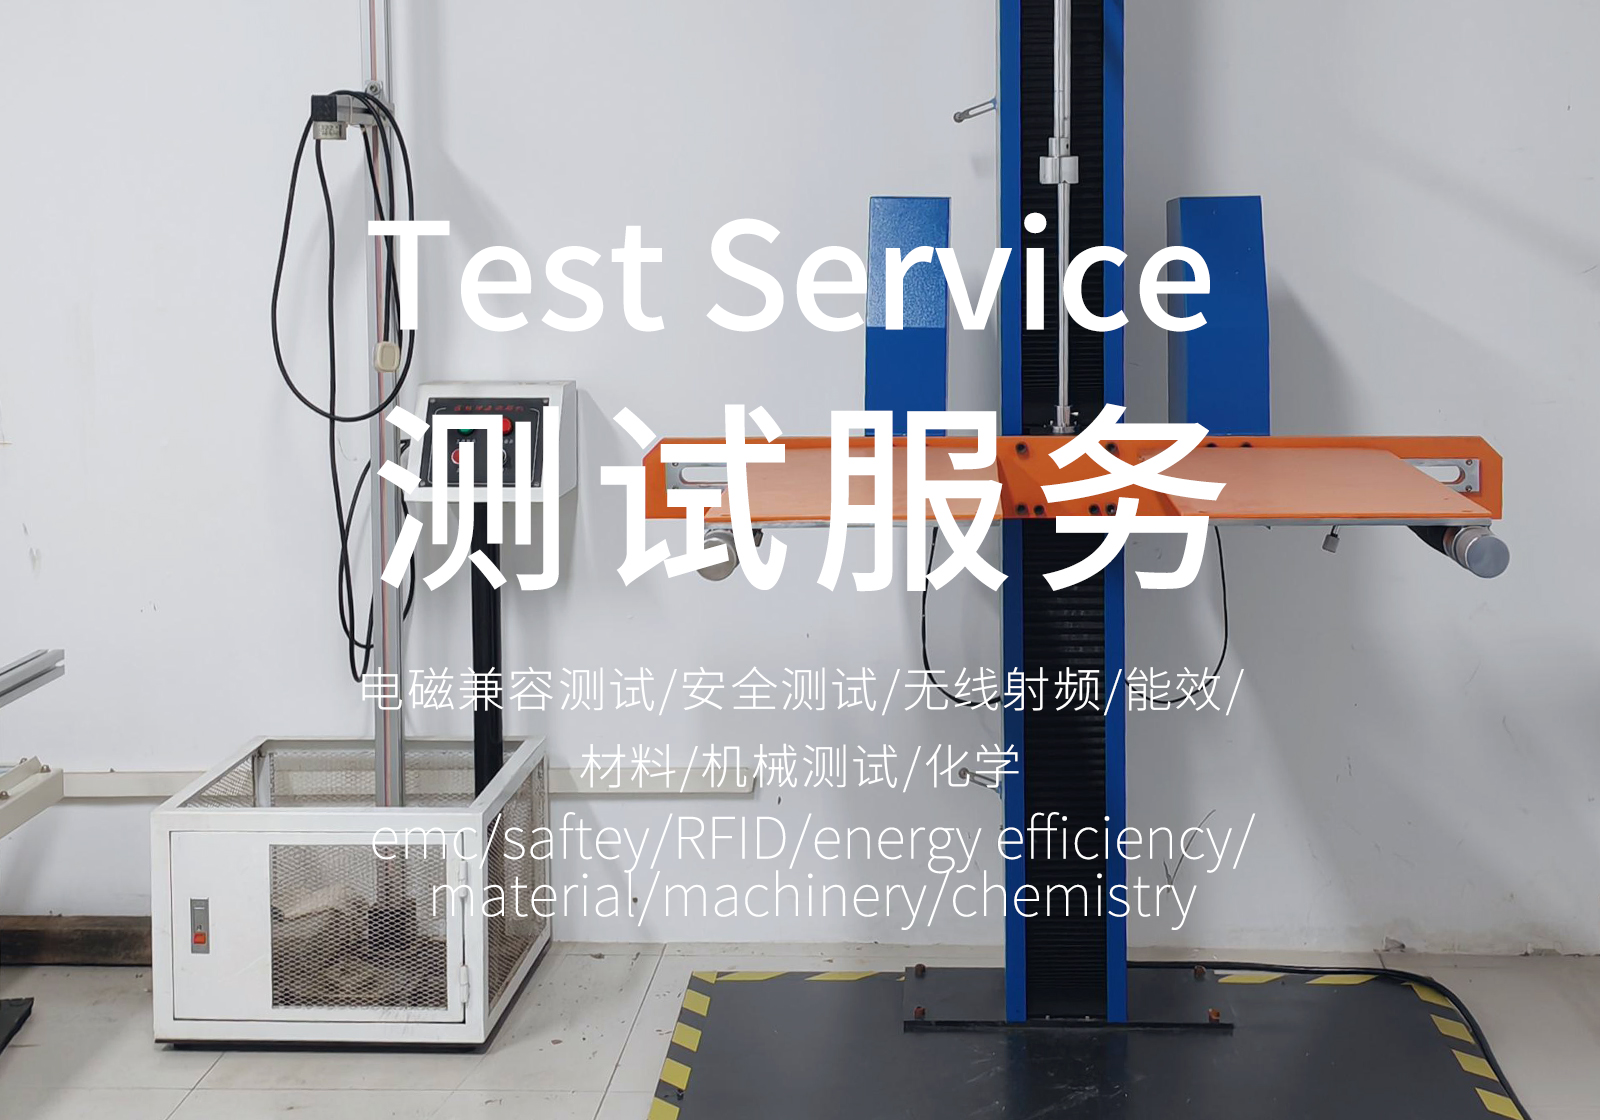 Testing service